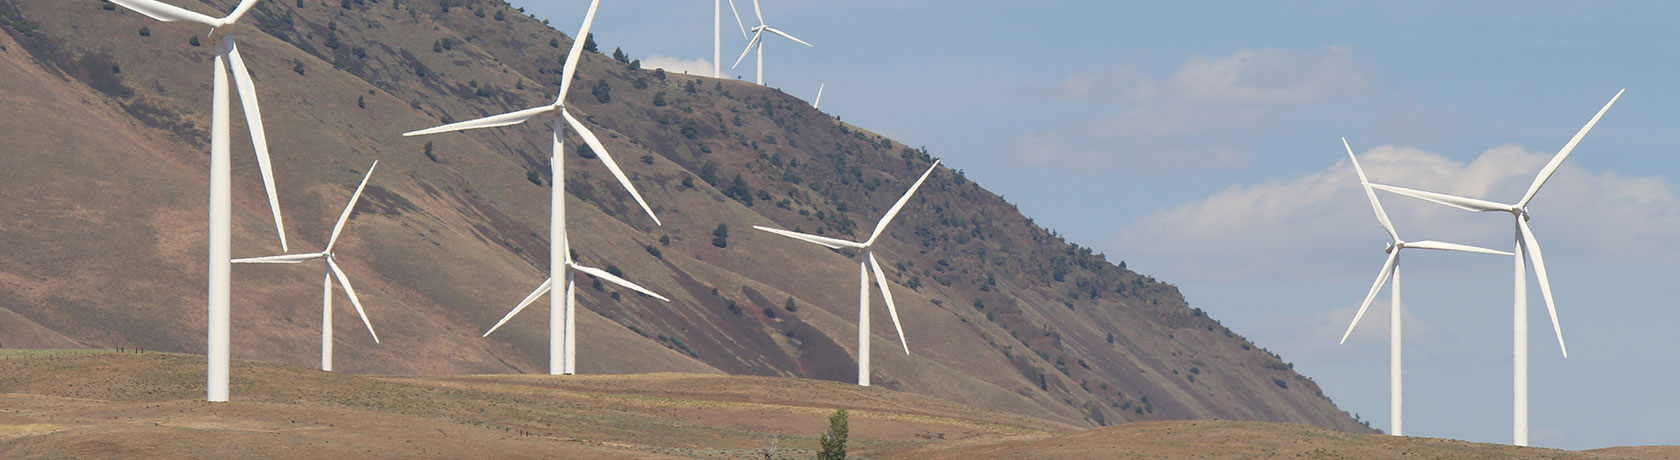 Photograph of Kennewick wind farm